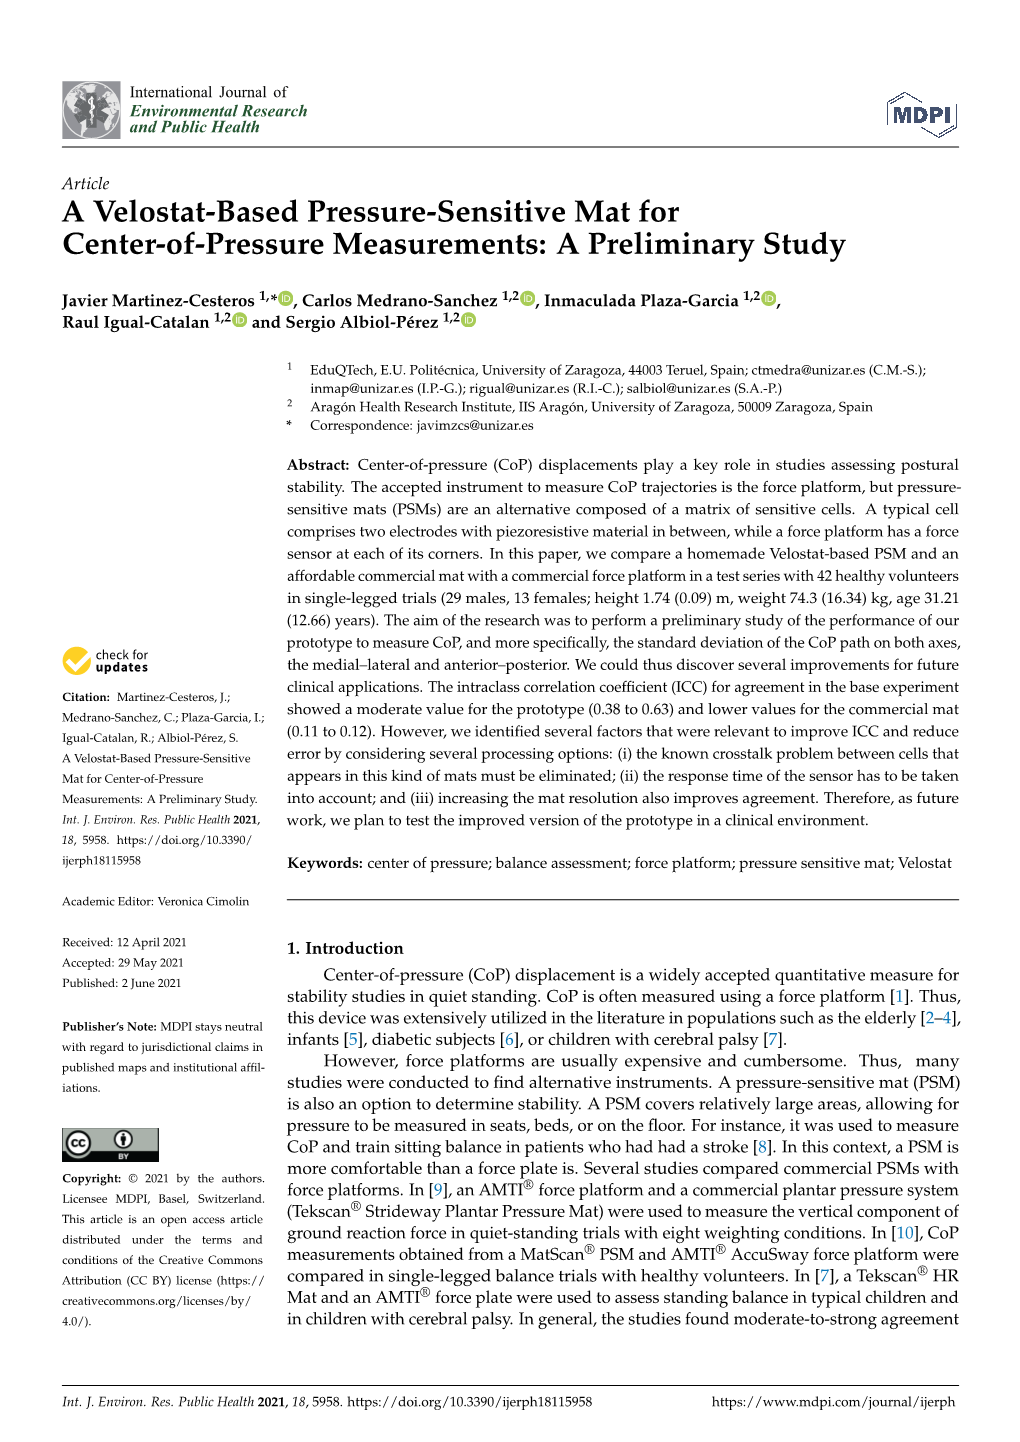 A Velostat-Based Pressure-Sensitive Mat for Center-Of-Pressure Measurements: a Preliminary Study